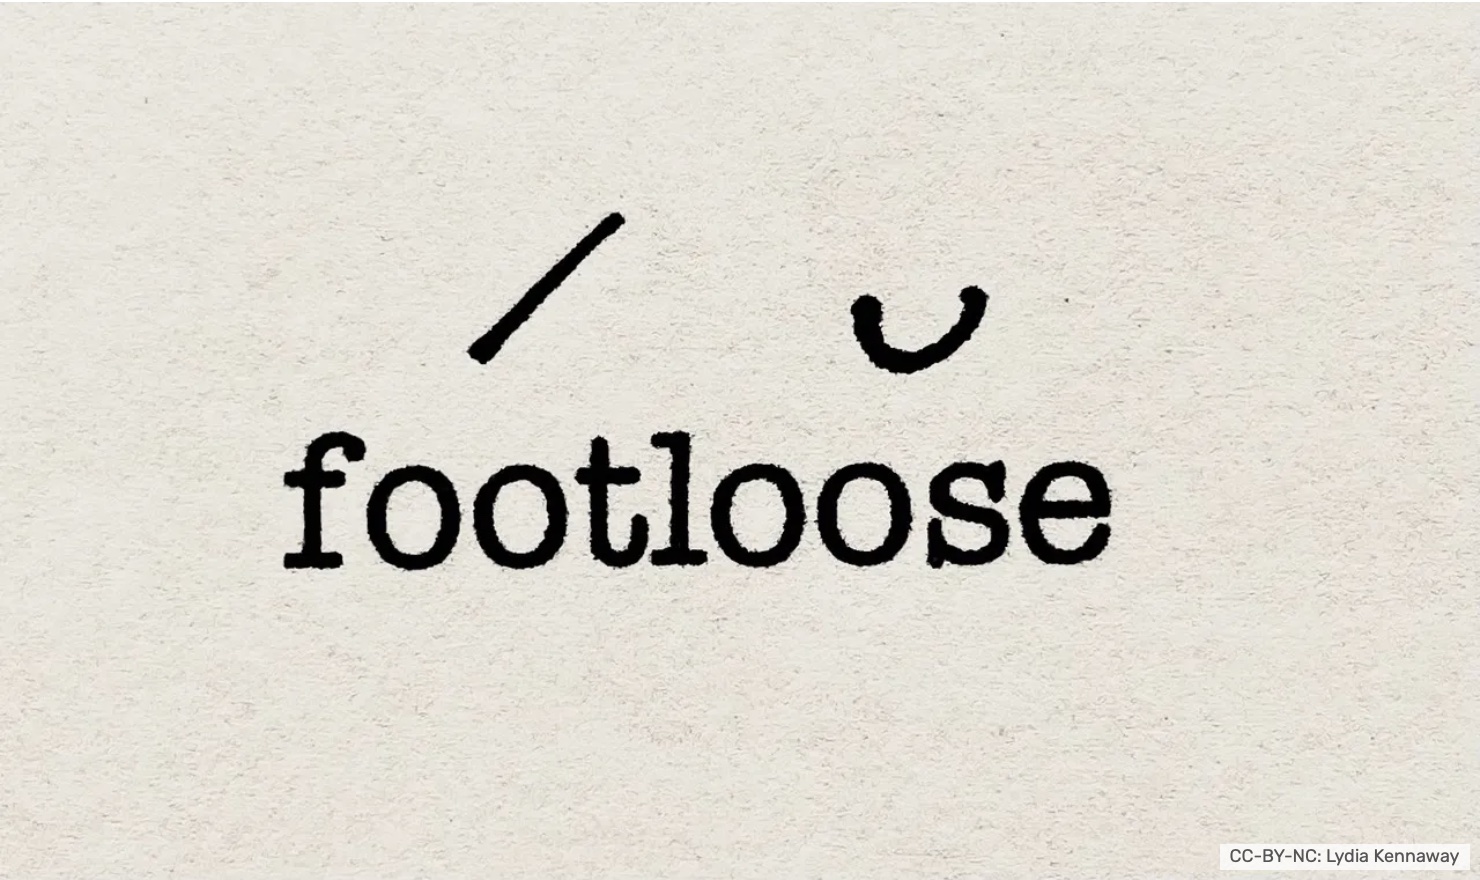 Footloose image